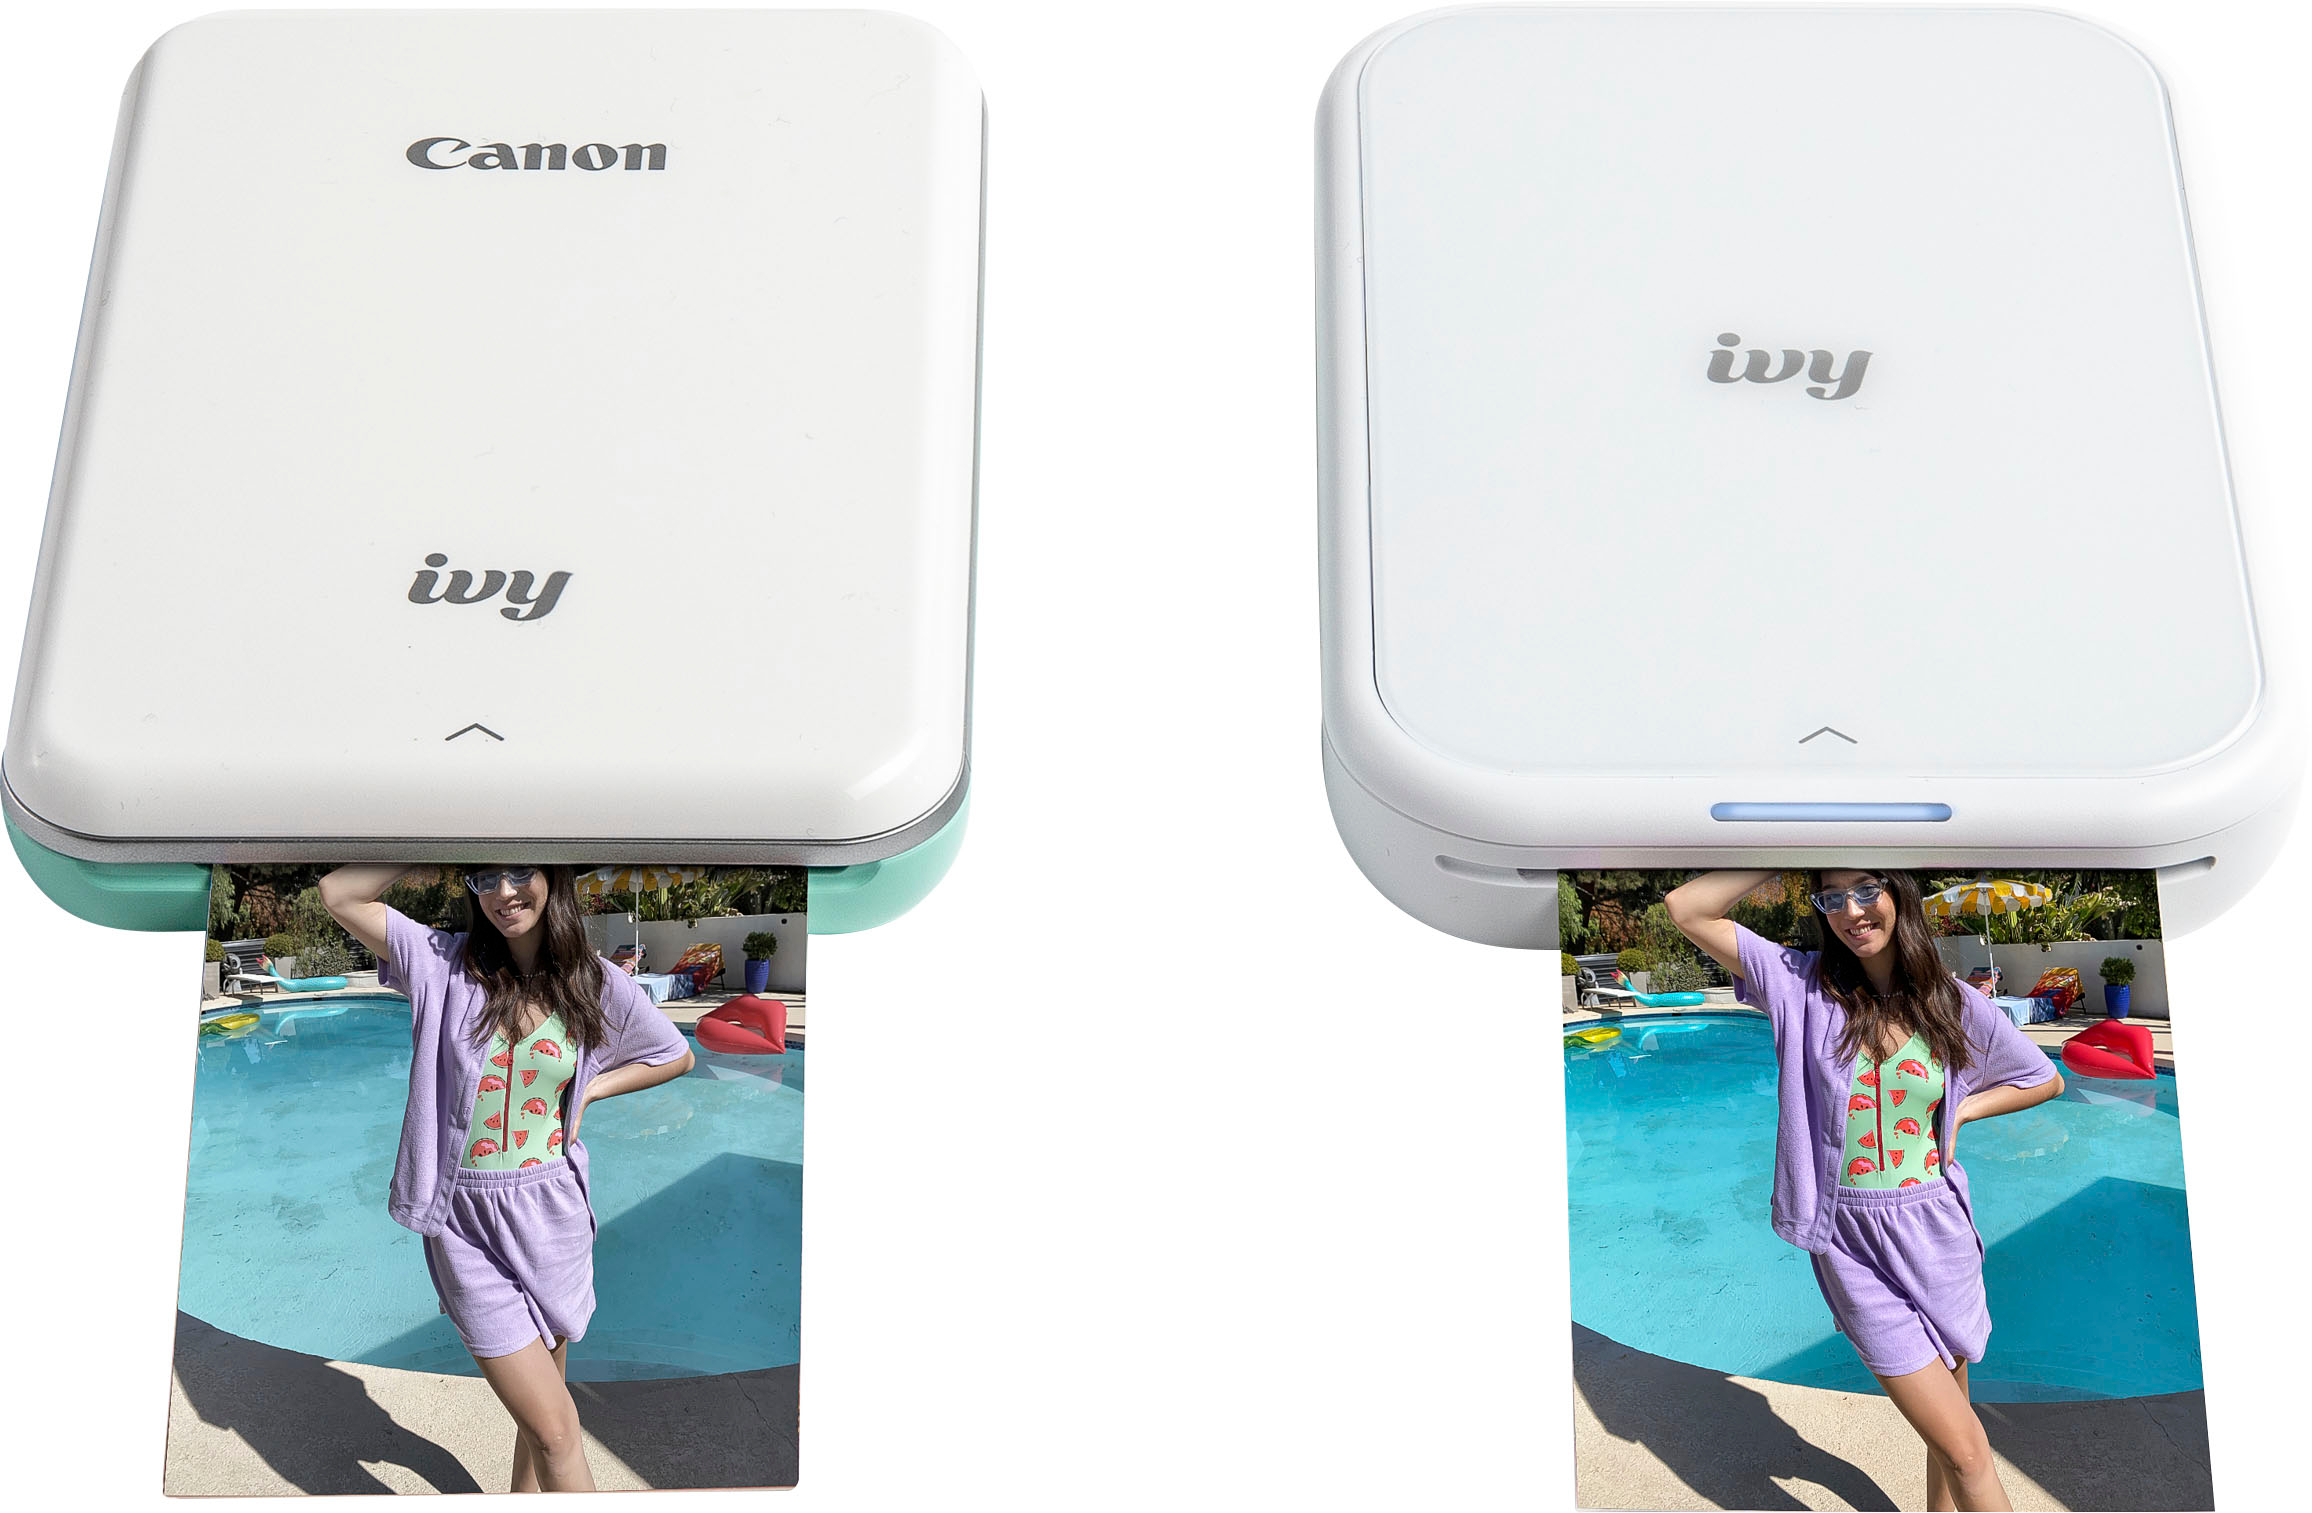 Canon IVY 2 Color Zink Mobile Printer for sale online